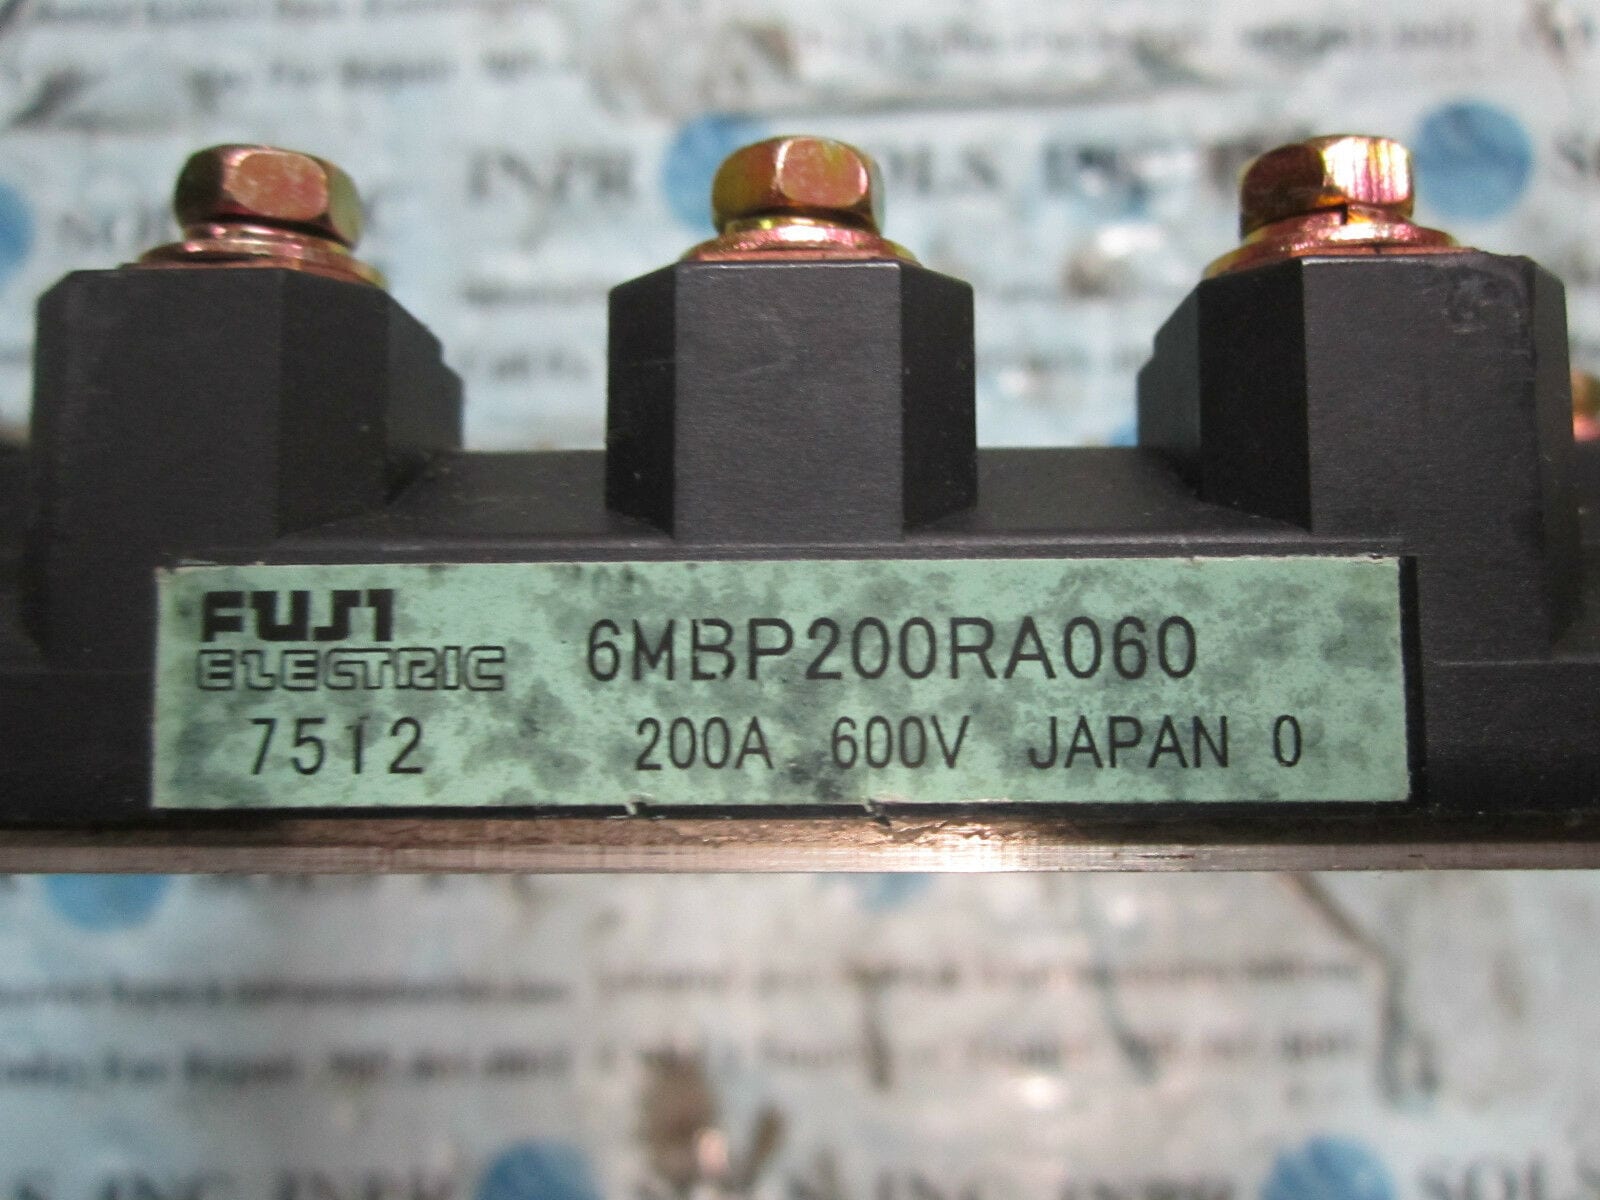 6MBP200RA060 NEW FUJI IGBT Power Module 200A 600V